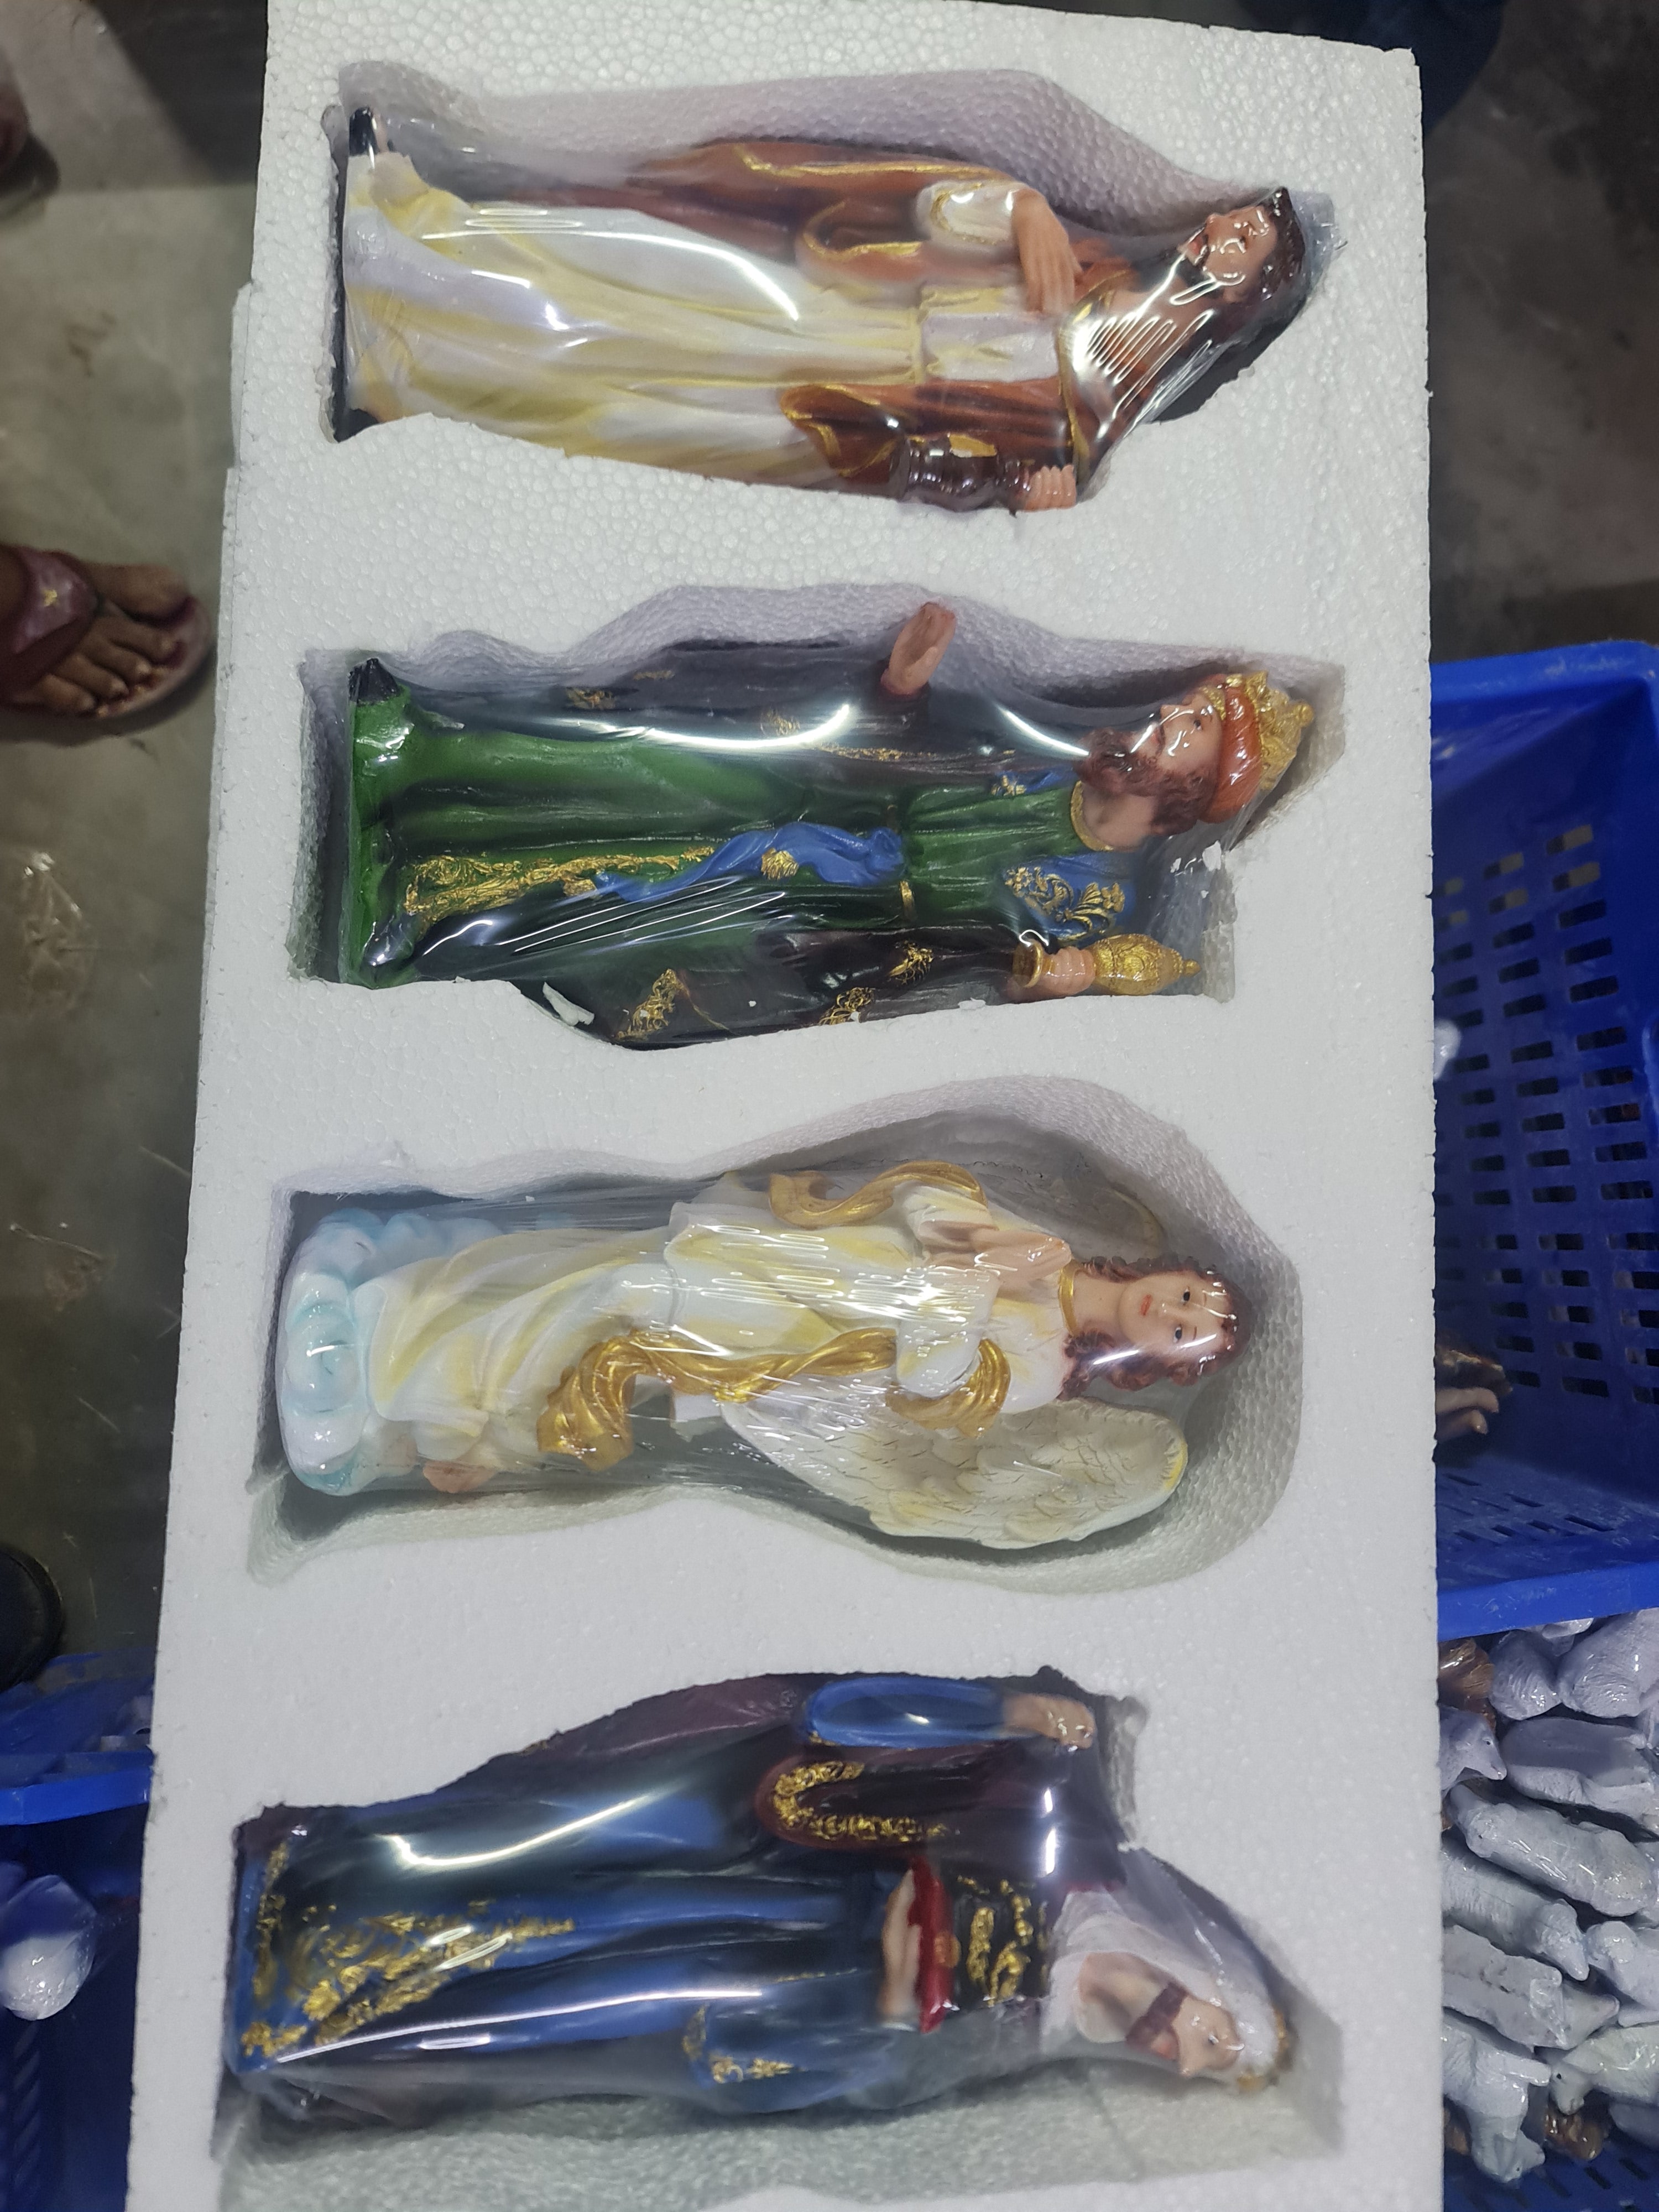 Buy Christmas Nativity Set for Decoration 12 inch